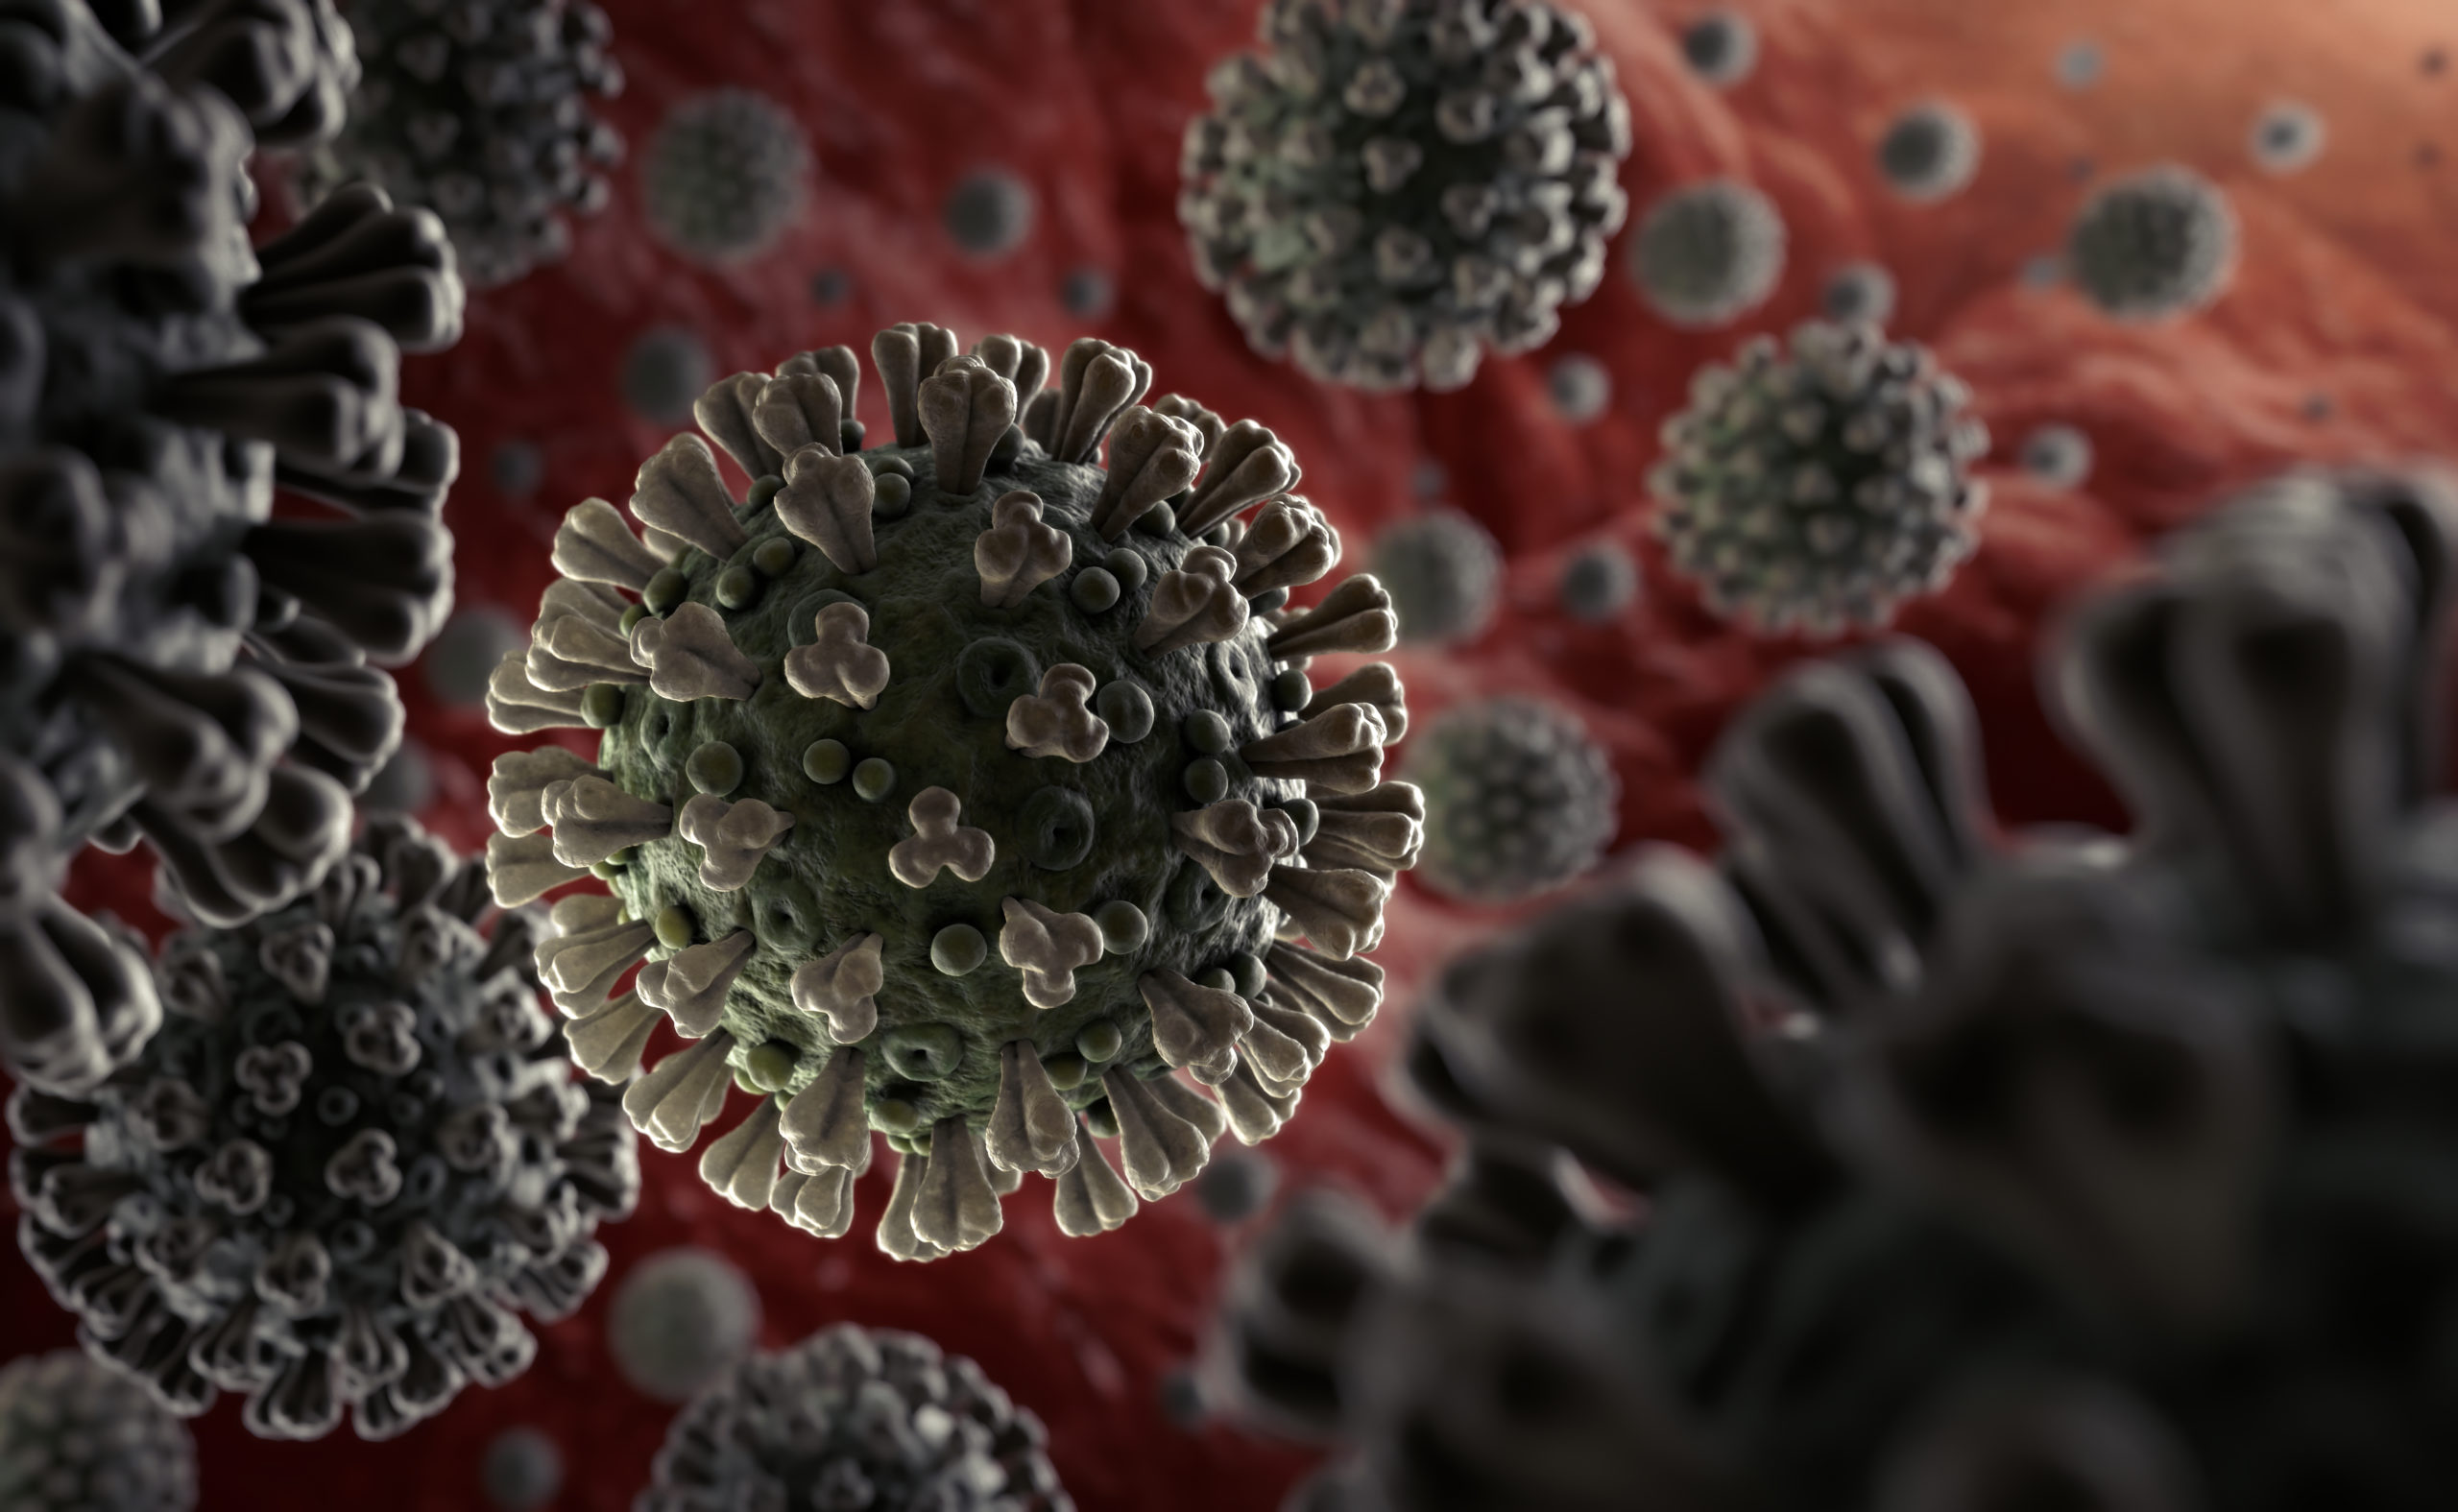 deadly coronavirus pandemic